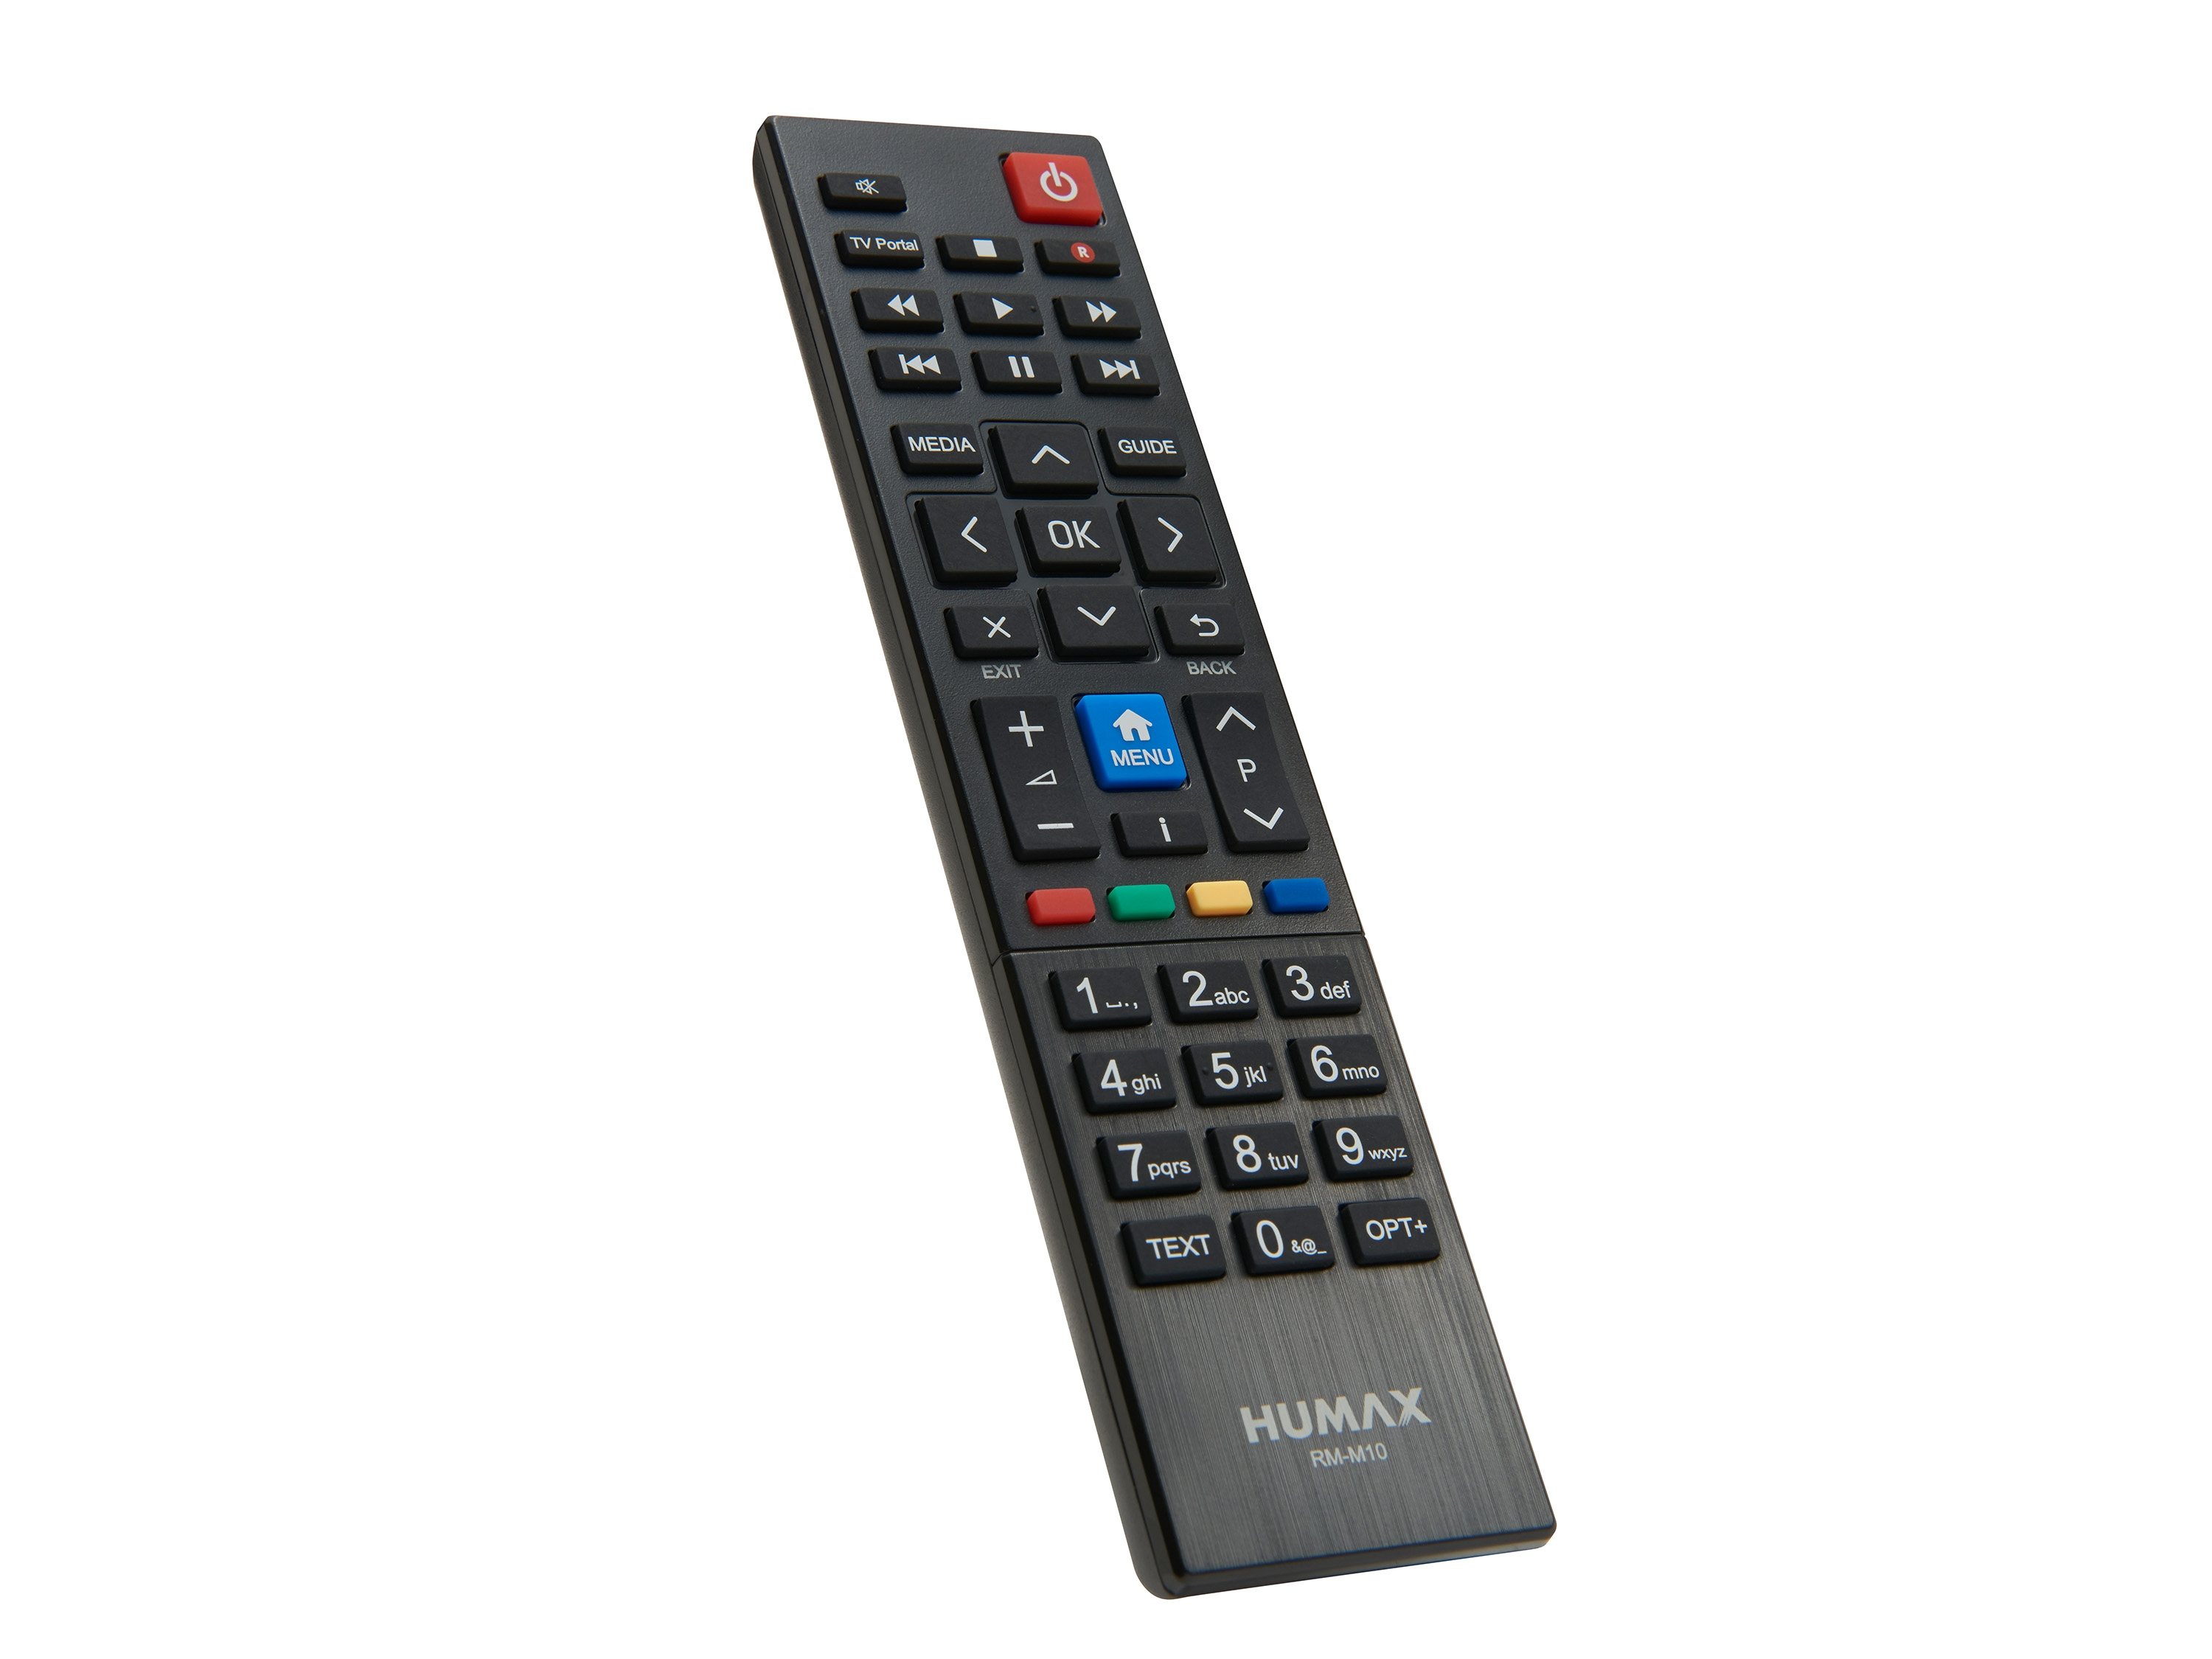 HUMAX HD NANO T2 DVB-T-Receiver PVR-Funktion, schwarz) (HDTV